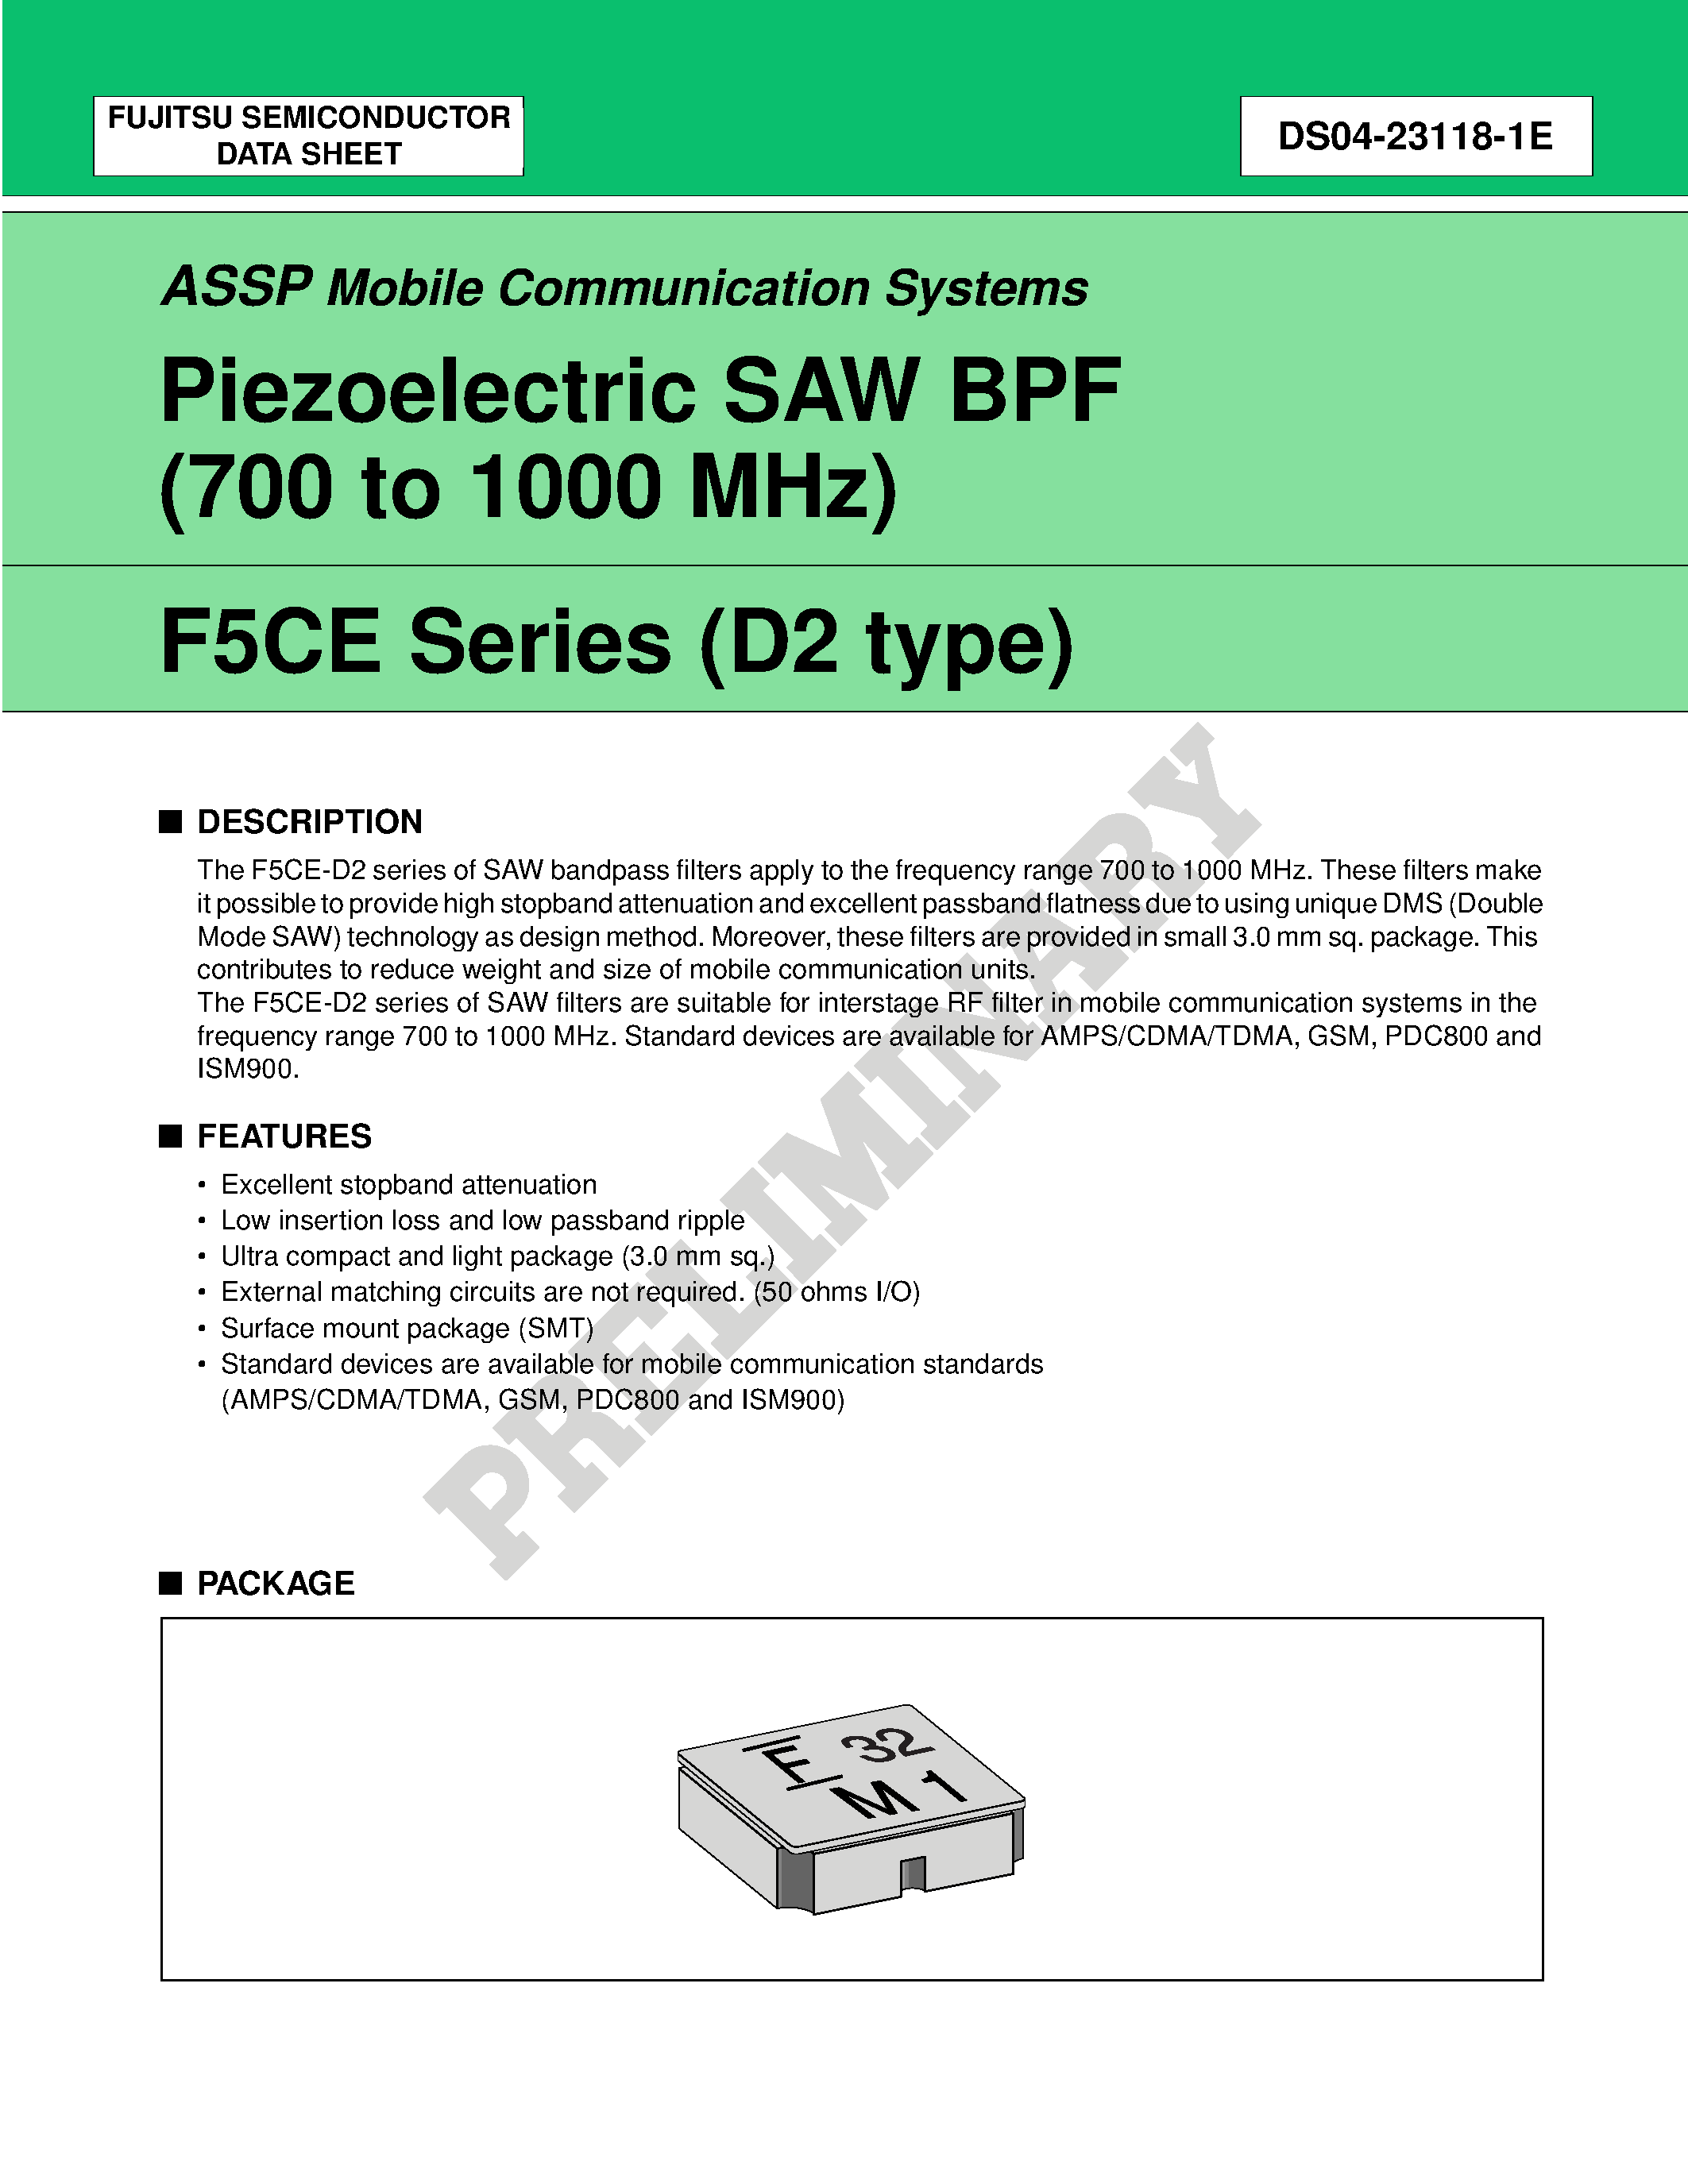 Даташит FAR-F5CE-915M00-D238-U - Piezoelectric SAW BPF (700 to 1700 MHz) страница 1